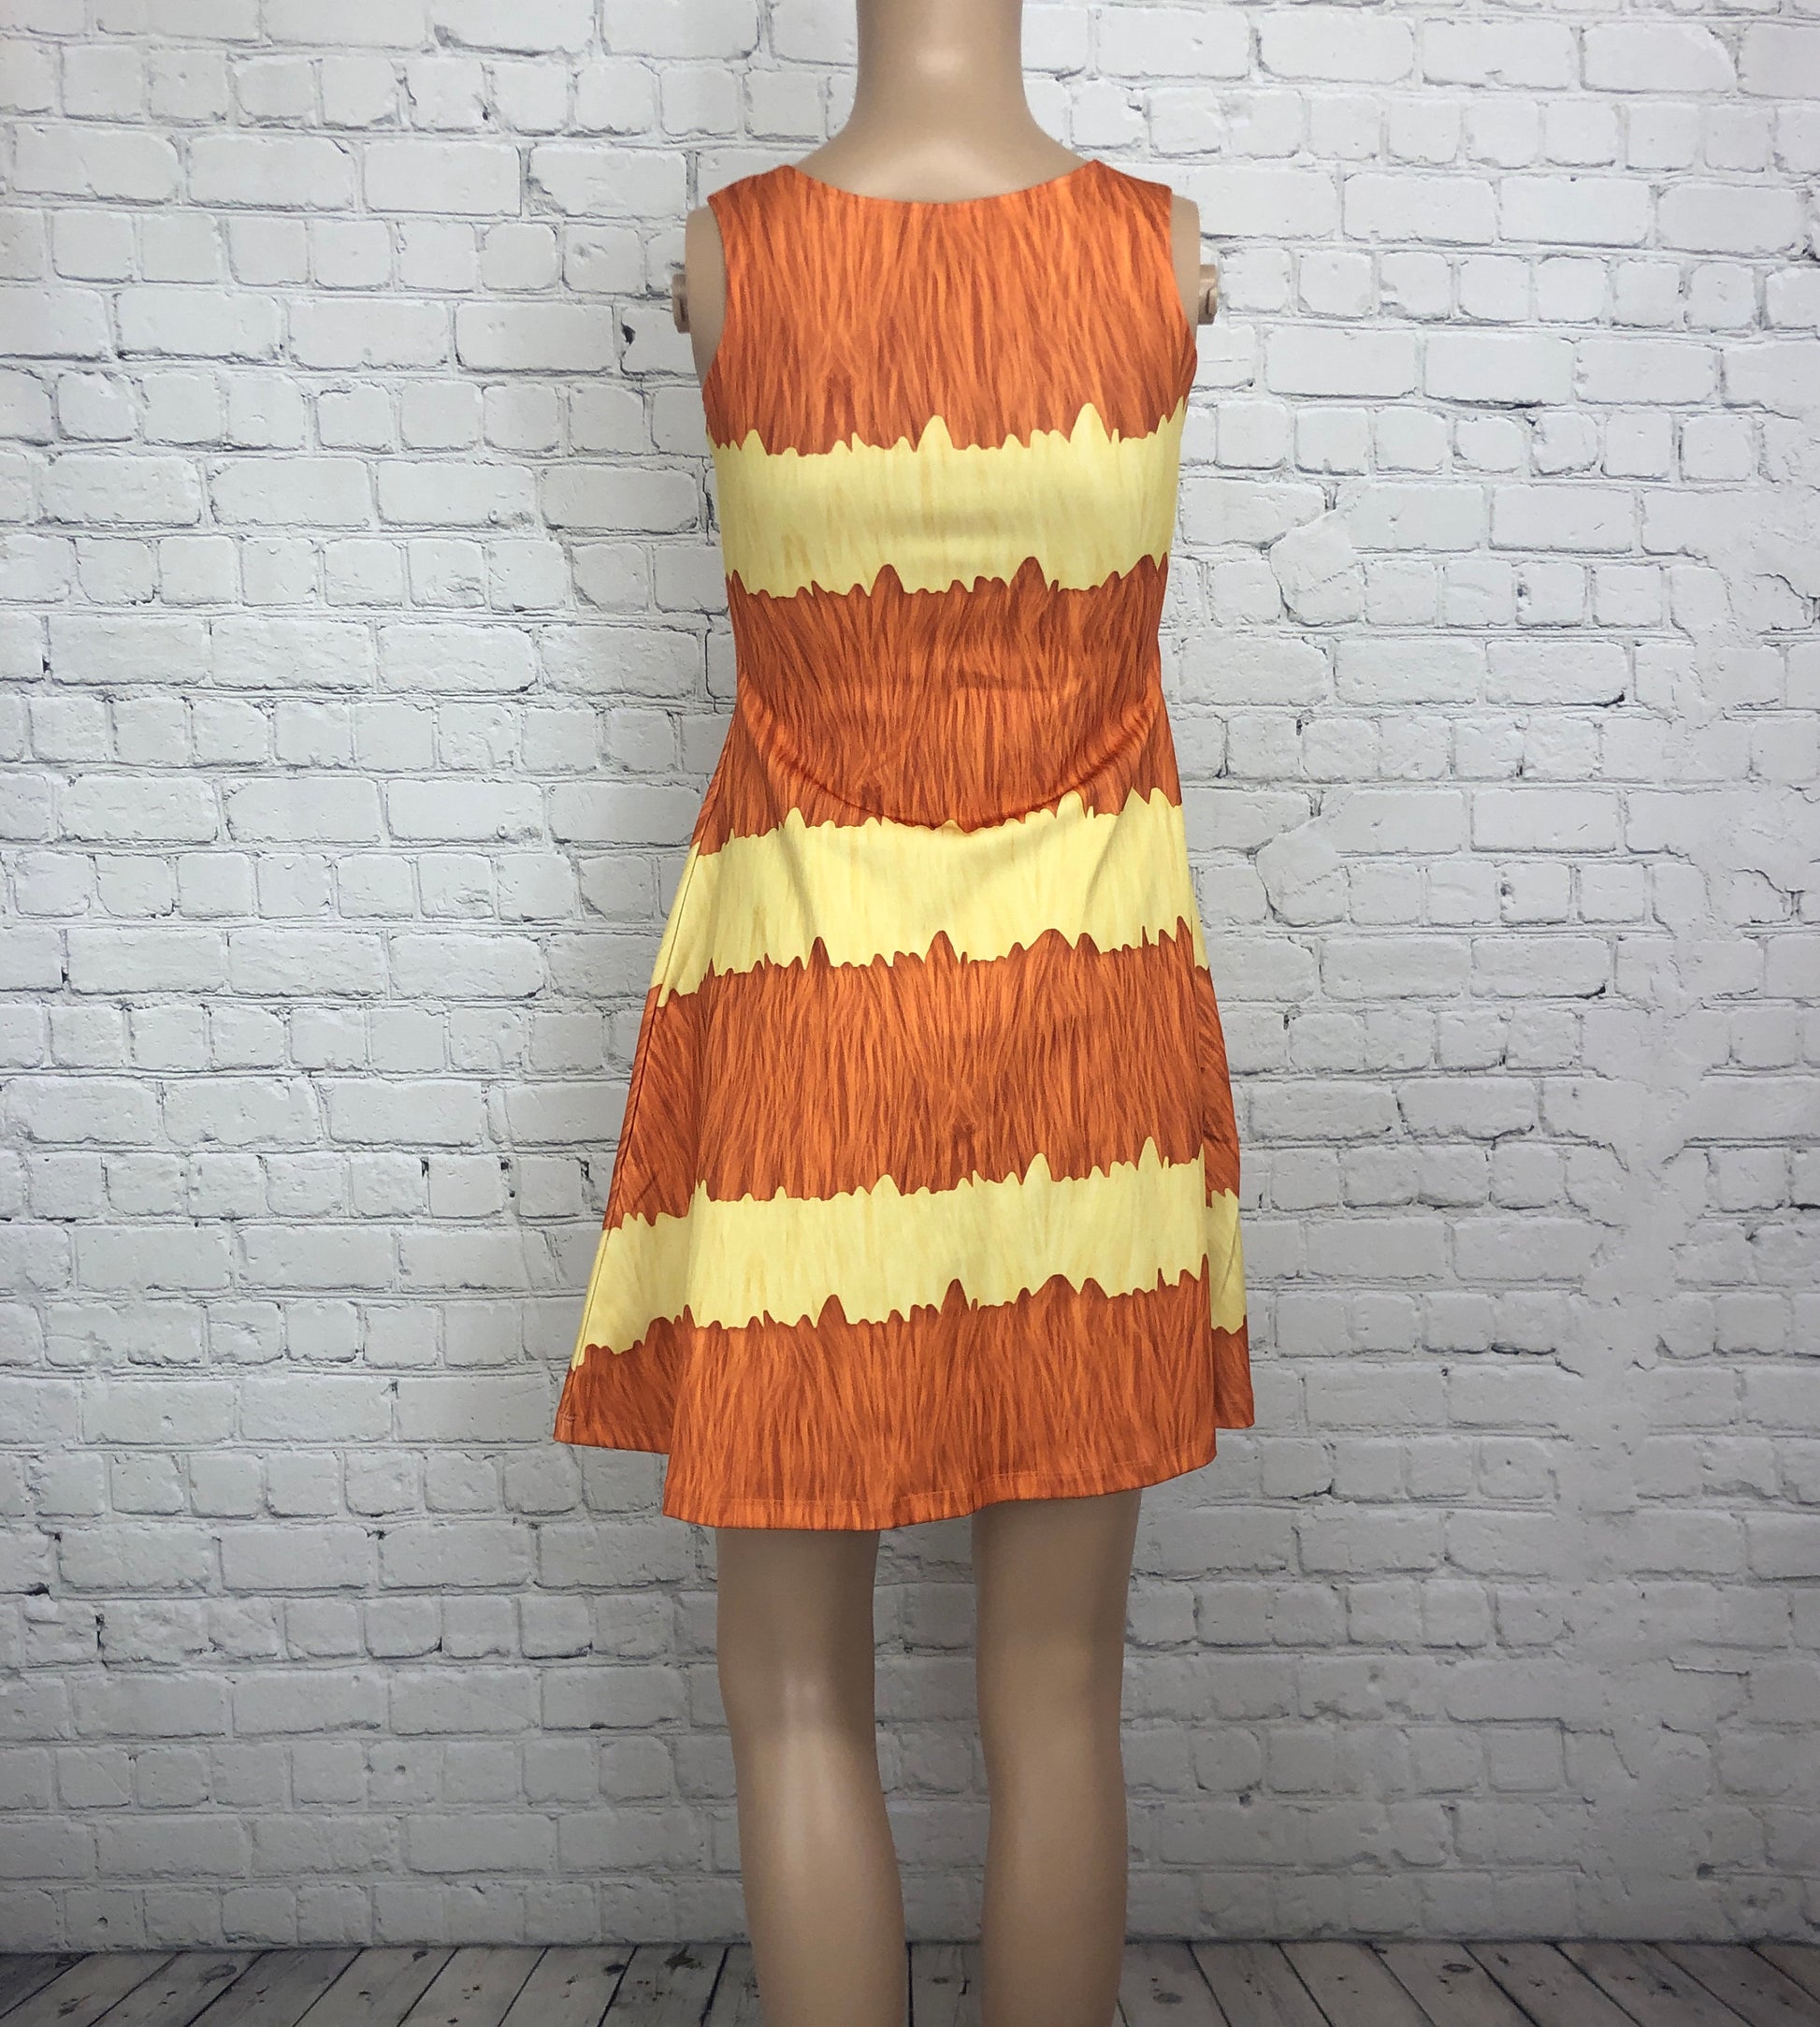 George Sanderson Monsters Inc Inspired Sleeveless Dress